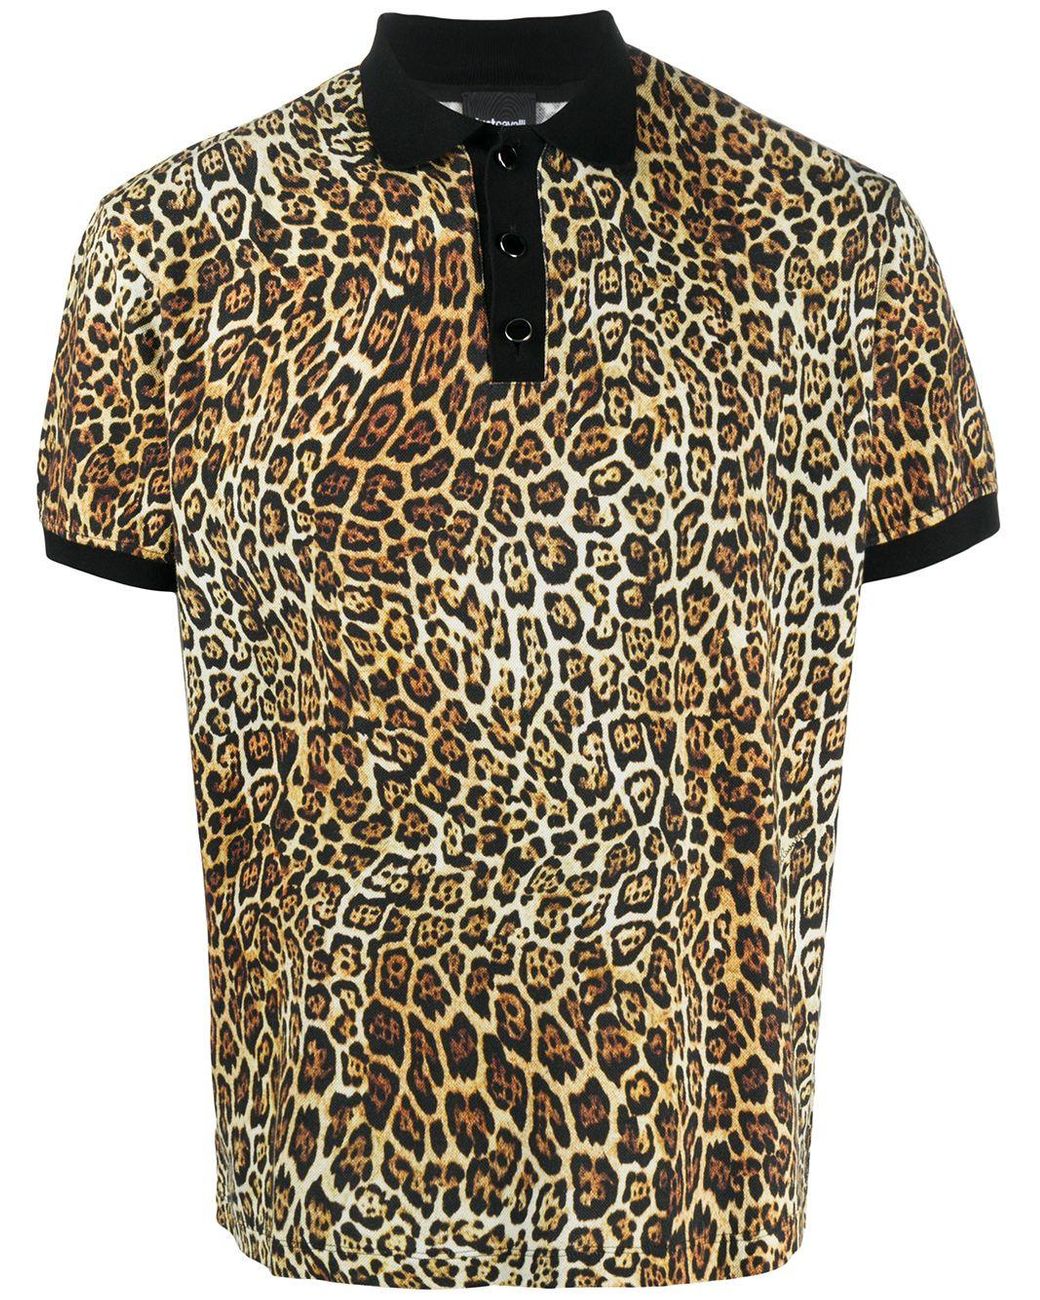 Just Cavalli Leopard Print Polo T-shirt for Men - Lyst